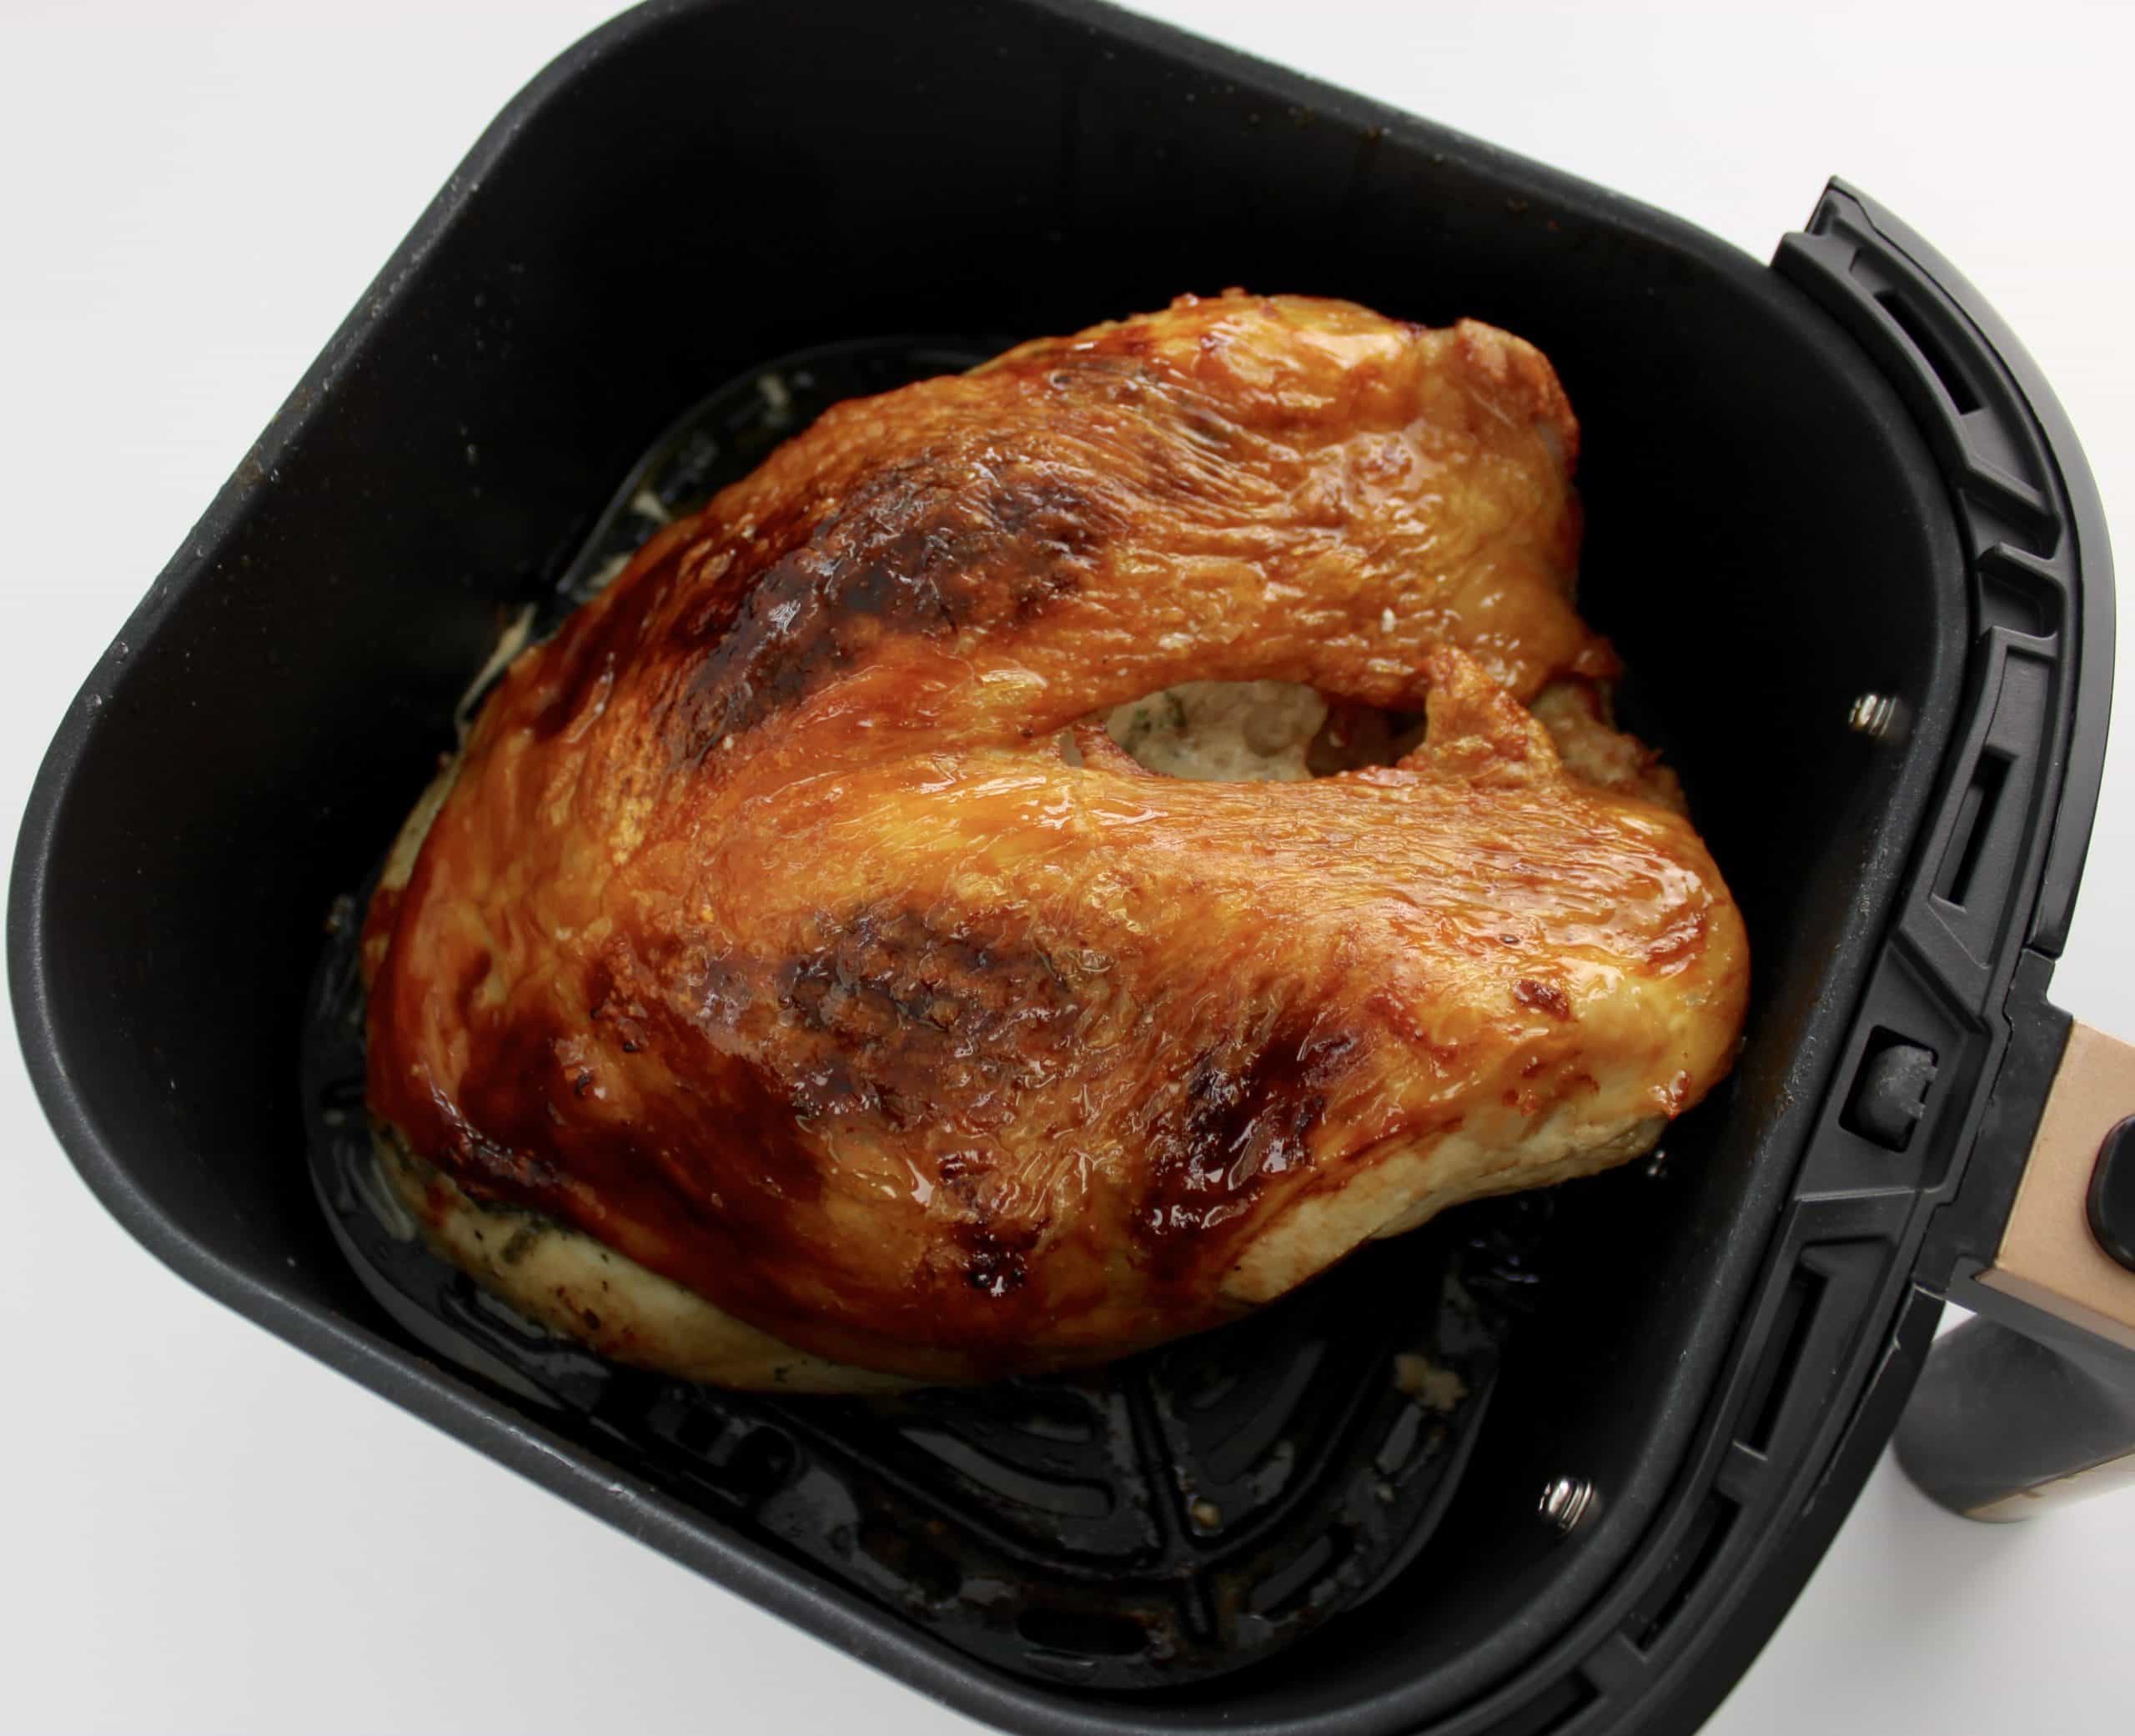 cooked Air Fryer Turkey Breast in basket